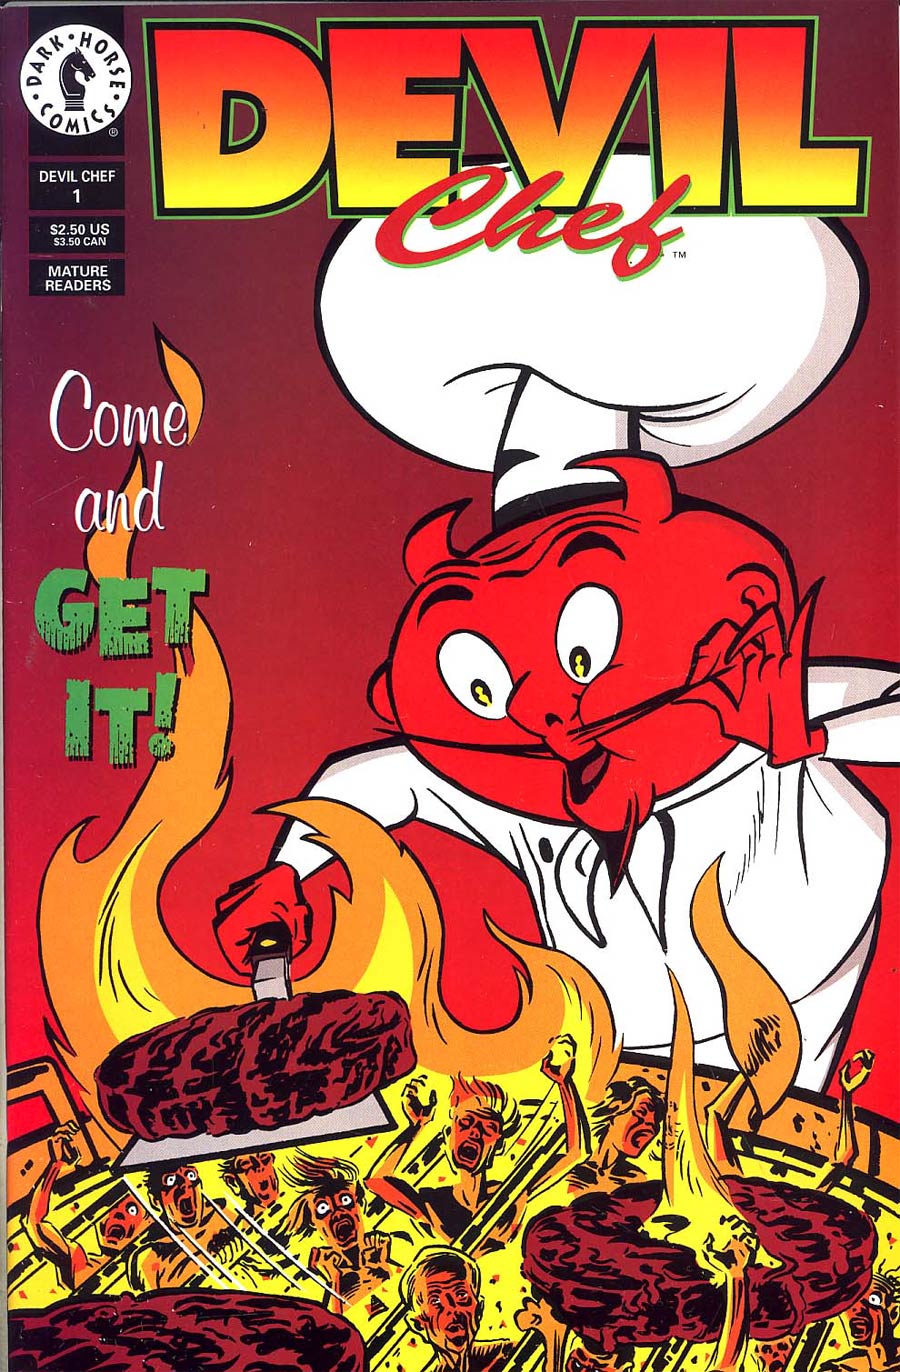 Devil Chef 